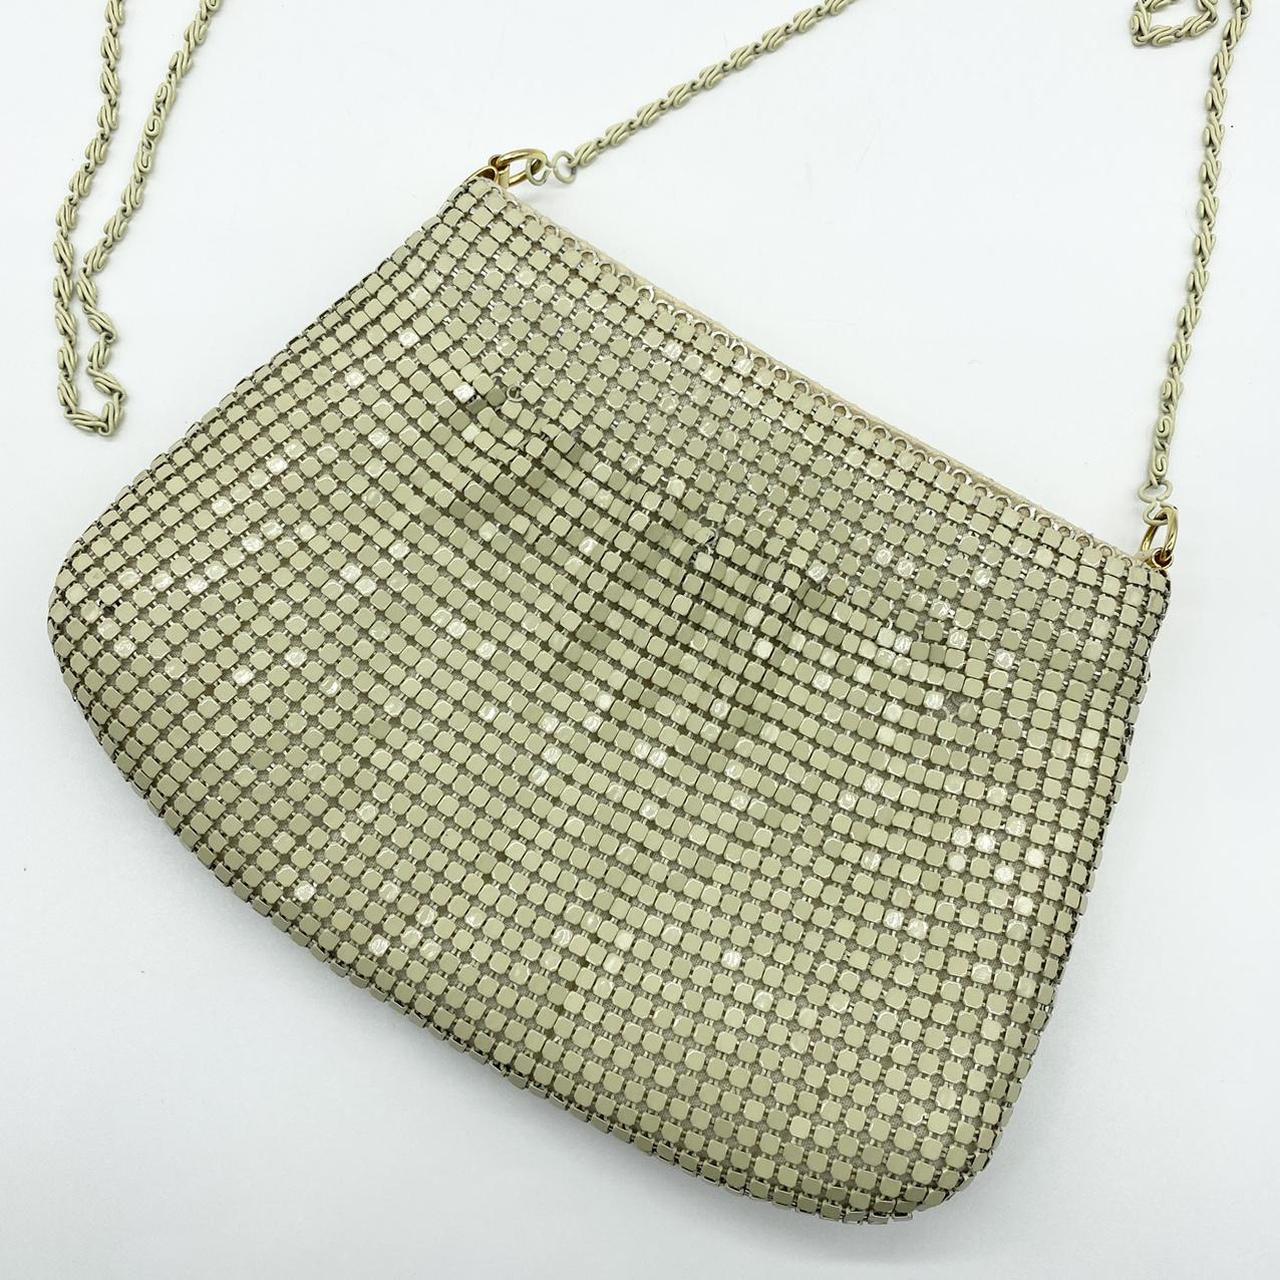 Product Image 1 - A cute vintage mesh bag